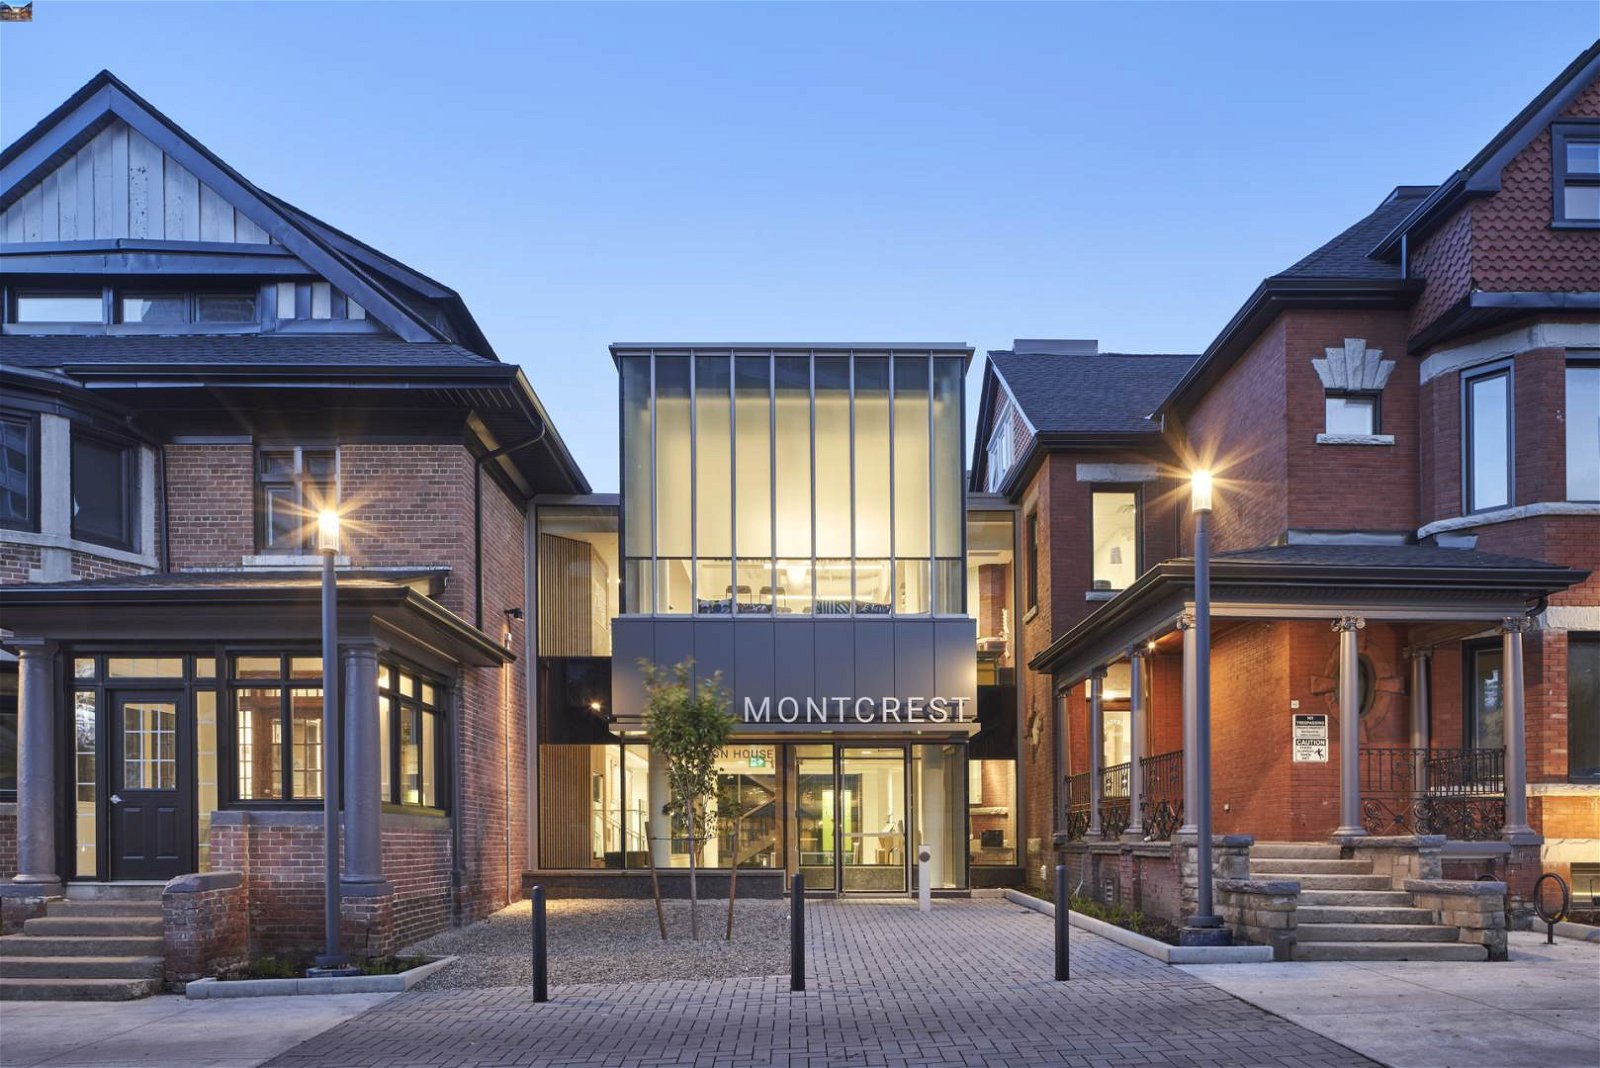 Montcrest School Renovation and Expansion